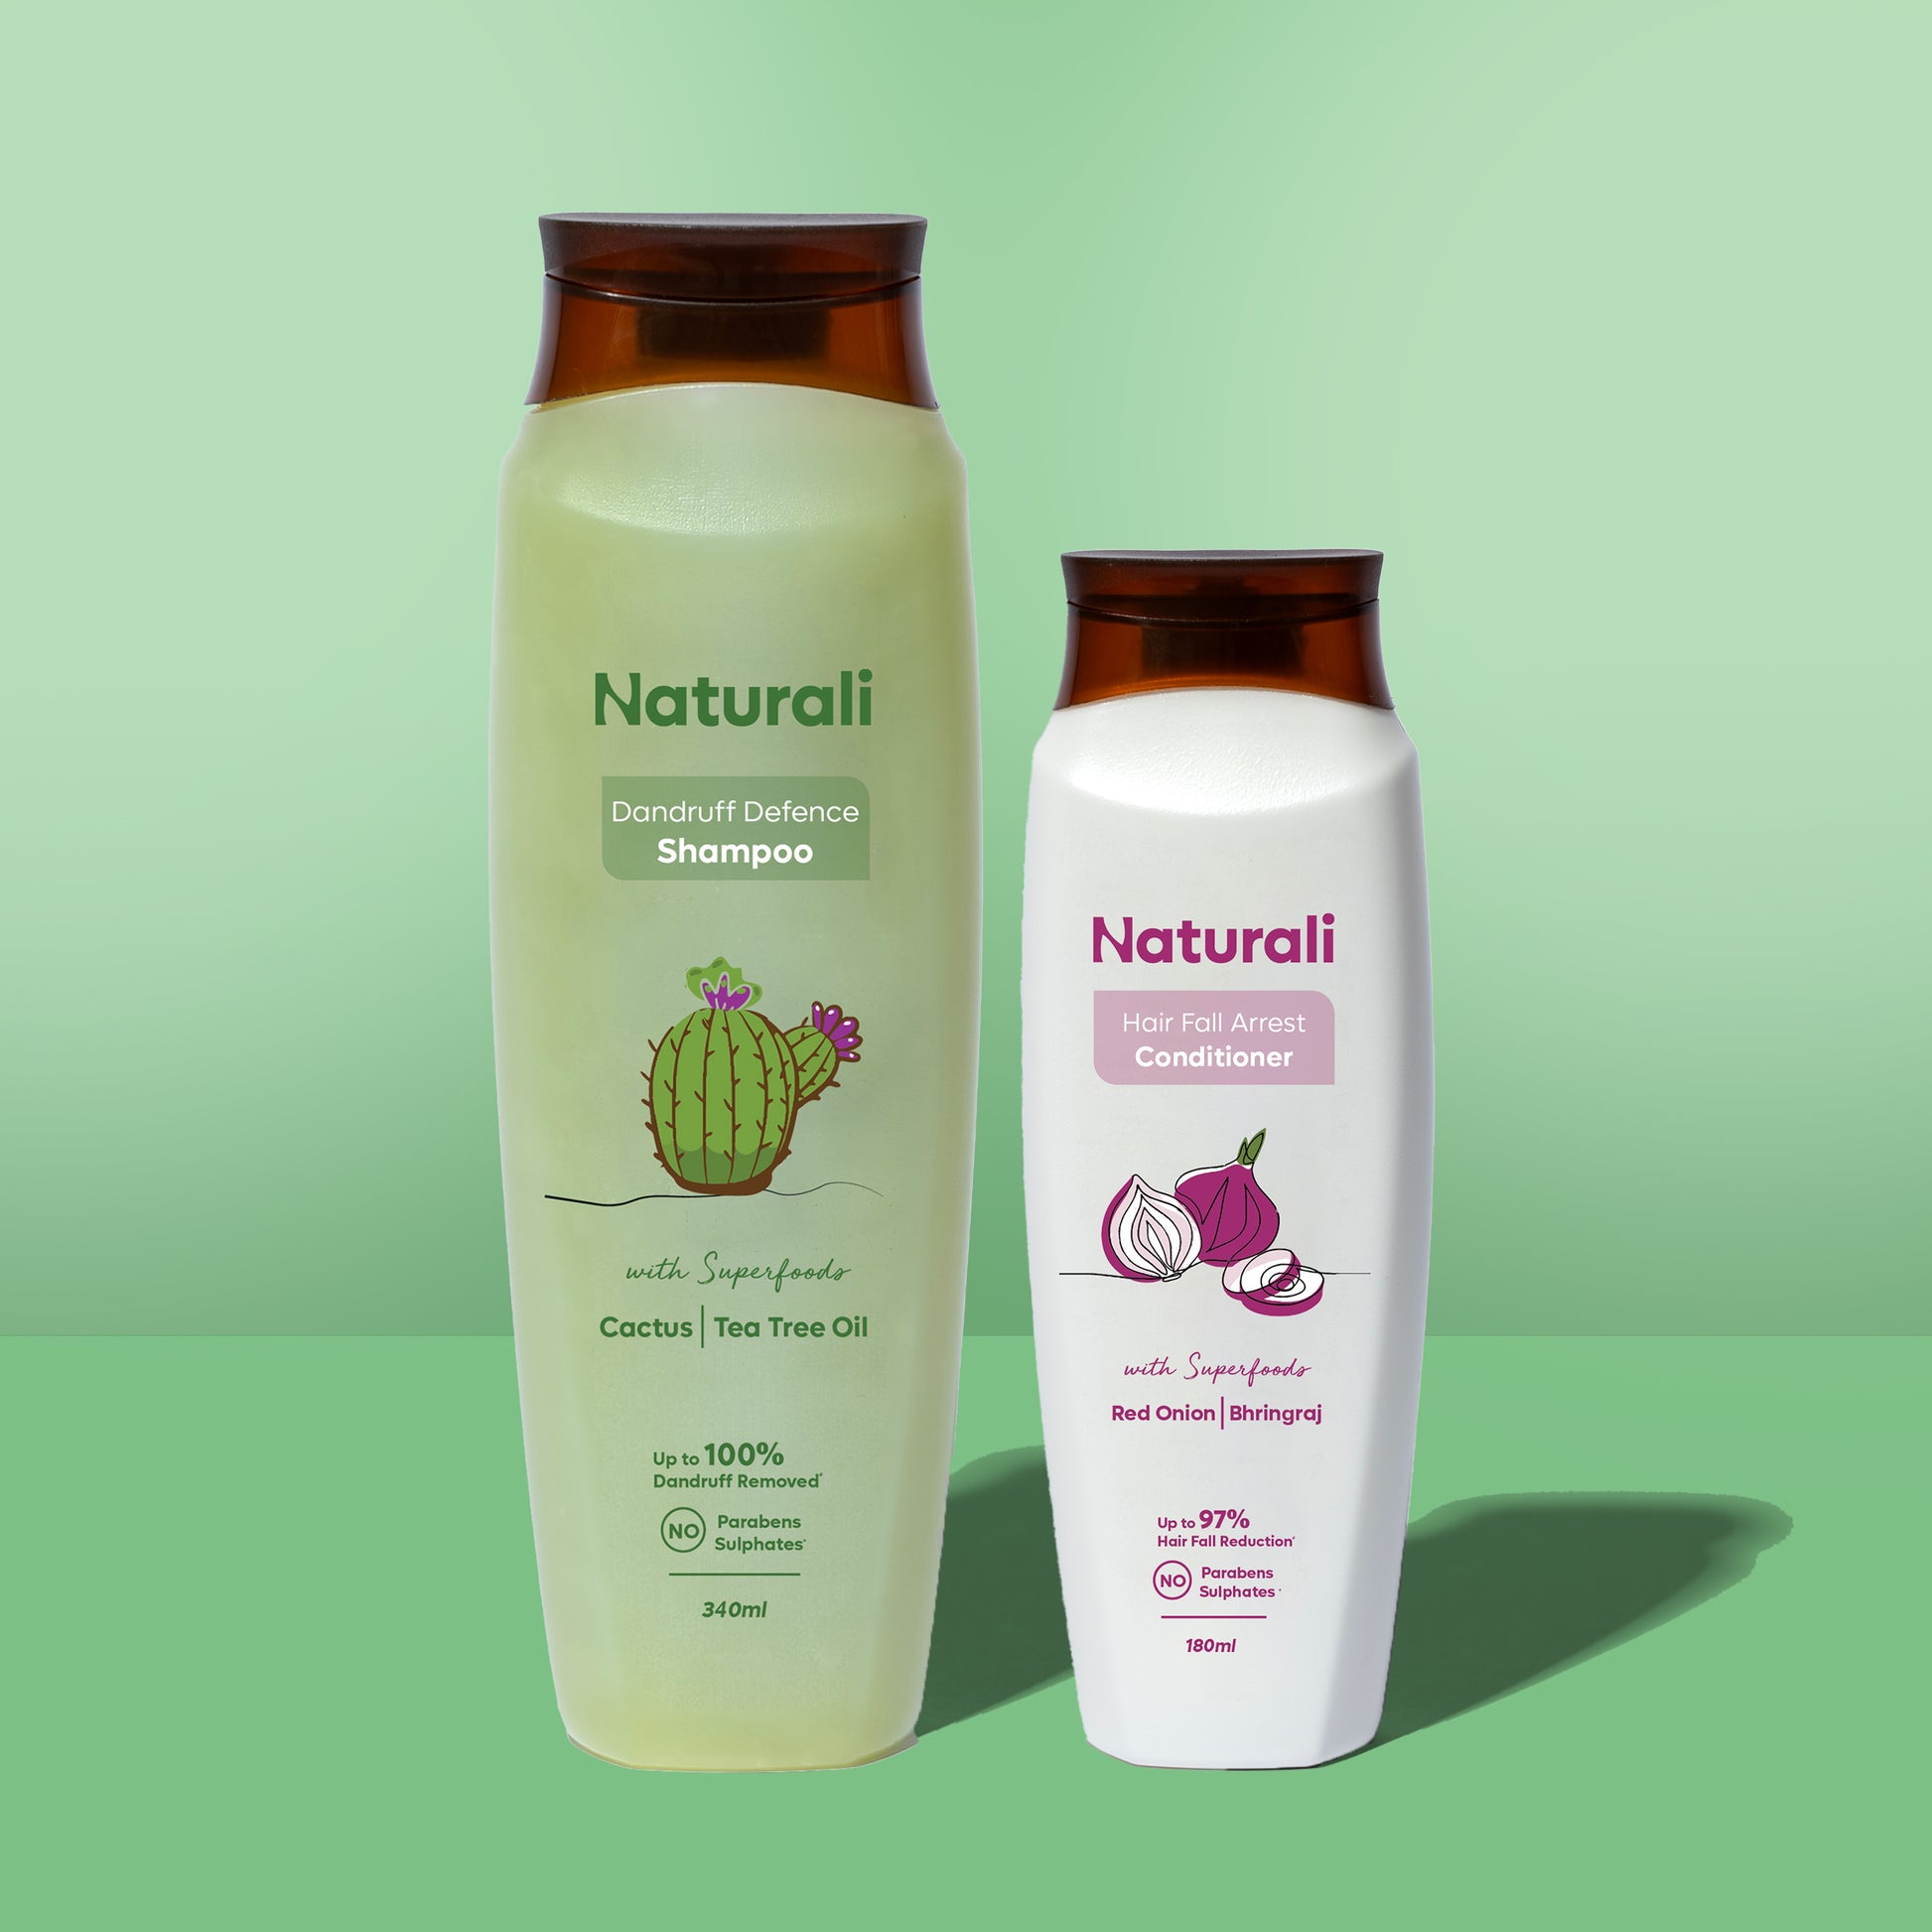 Naturali Dandruff Defence Shampoo 340ml + Hair Fall Arrest Conditioner 180ml